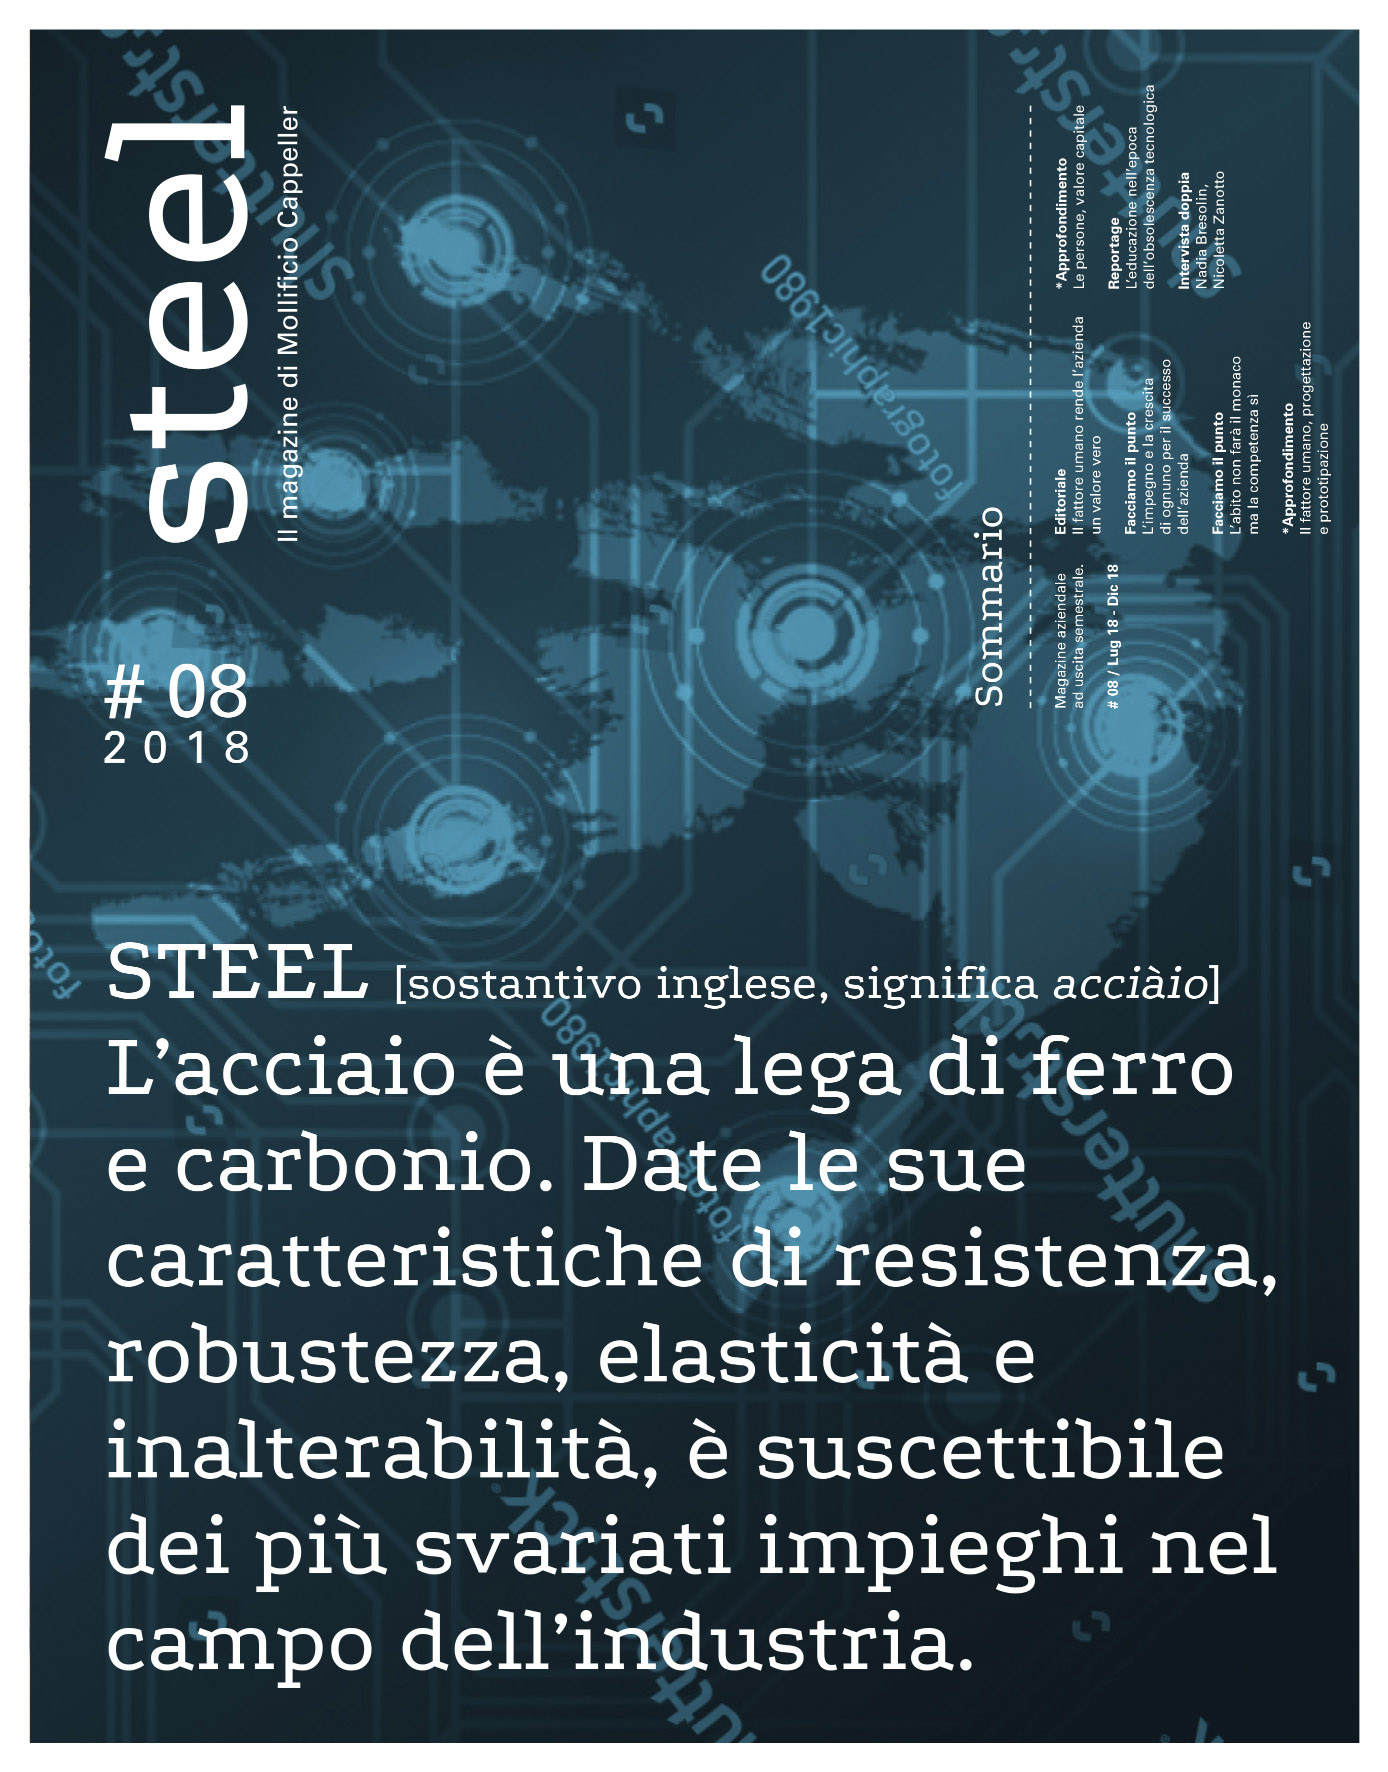 steel-04-20pagine.indd